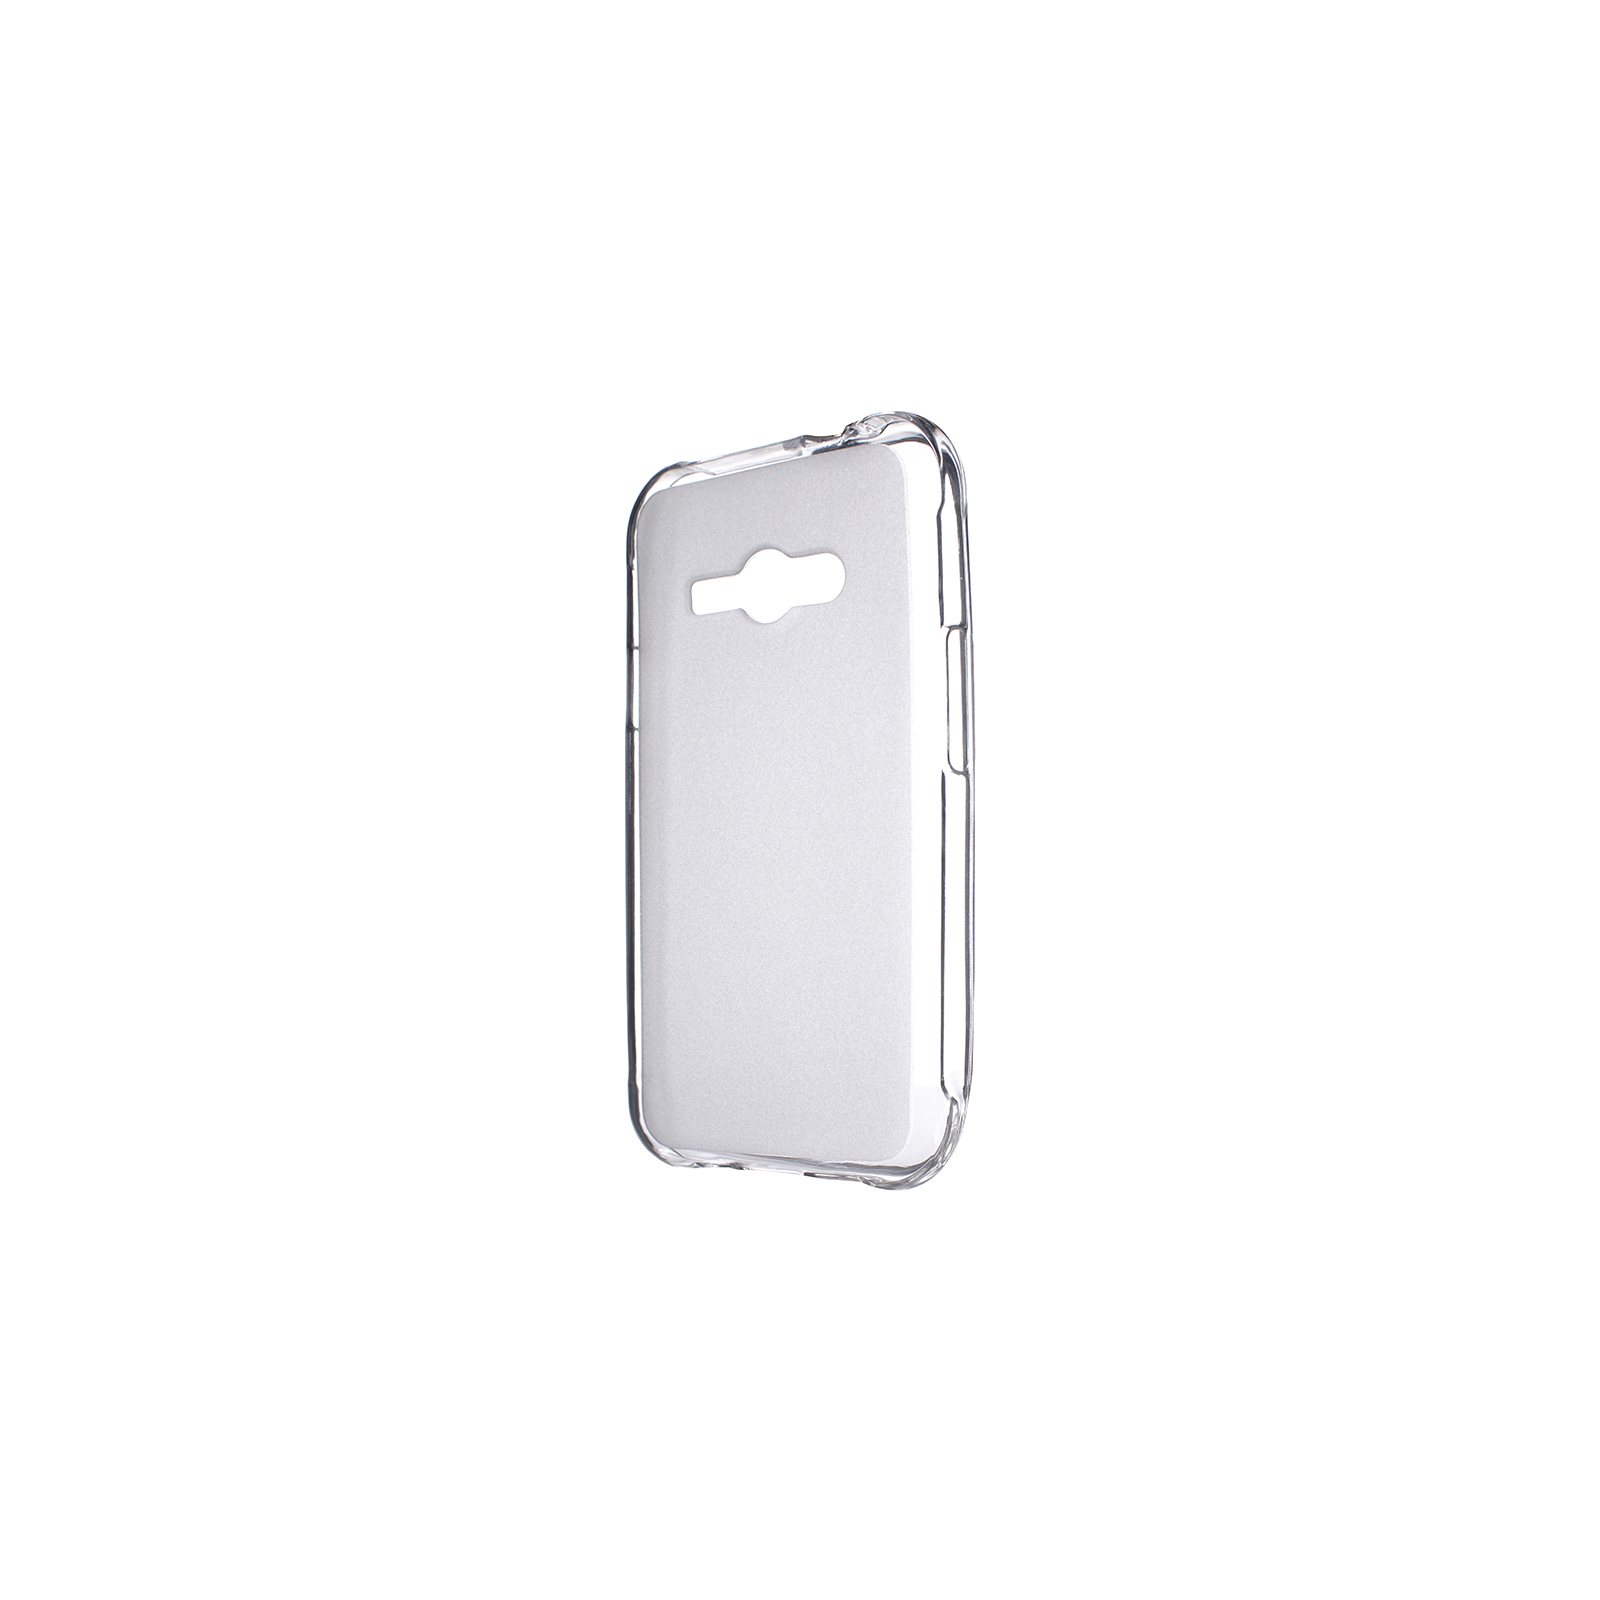 Чехол для моб. телефона Drobak для Samsung Galaxy J1 Ace J110H/DS (White Clear) (216969)